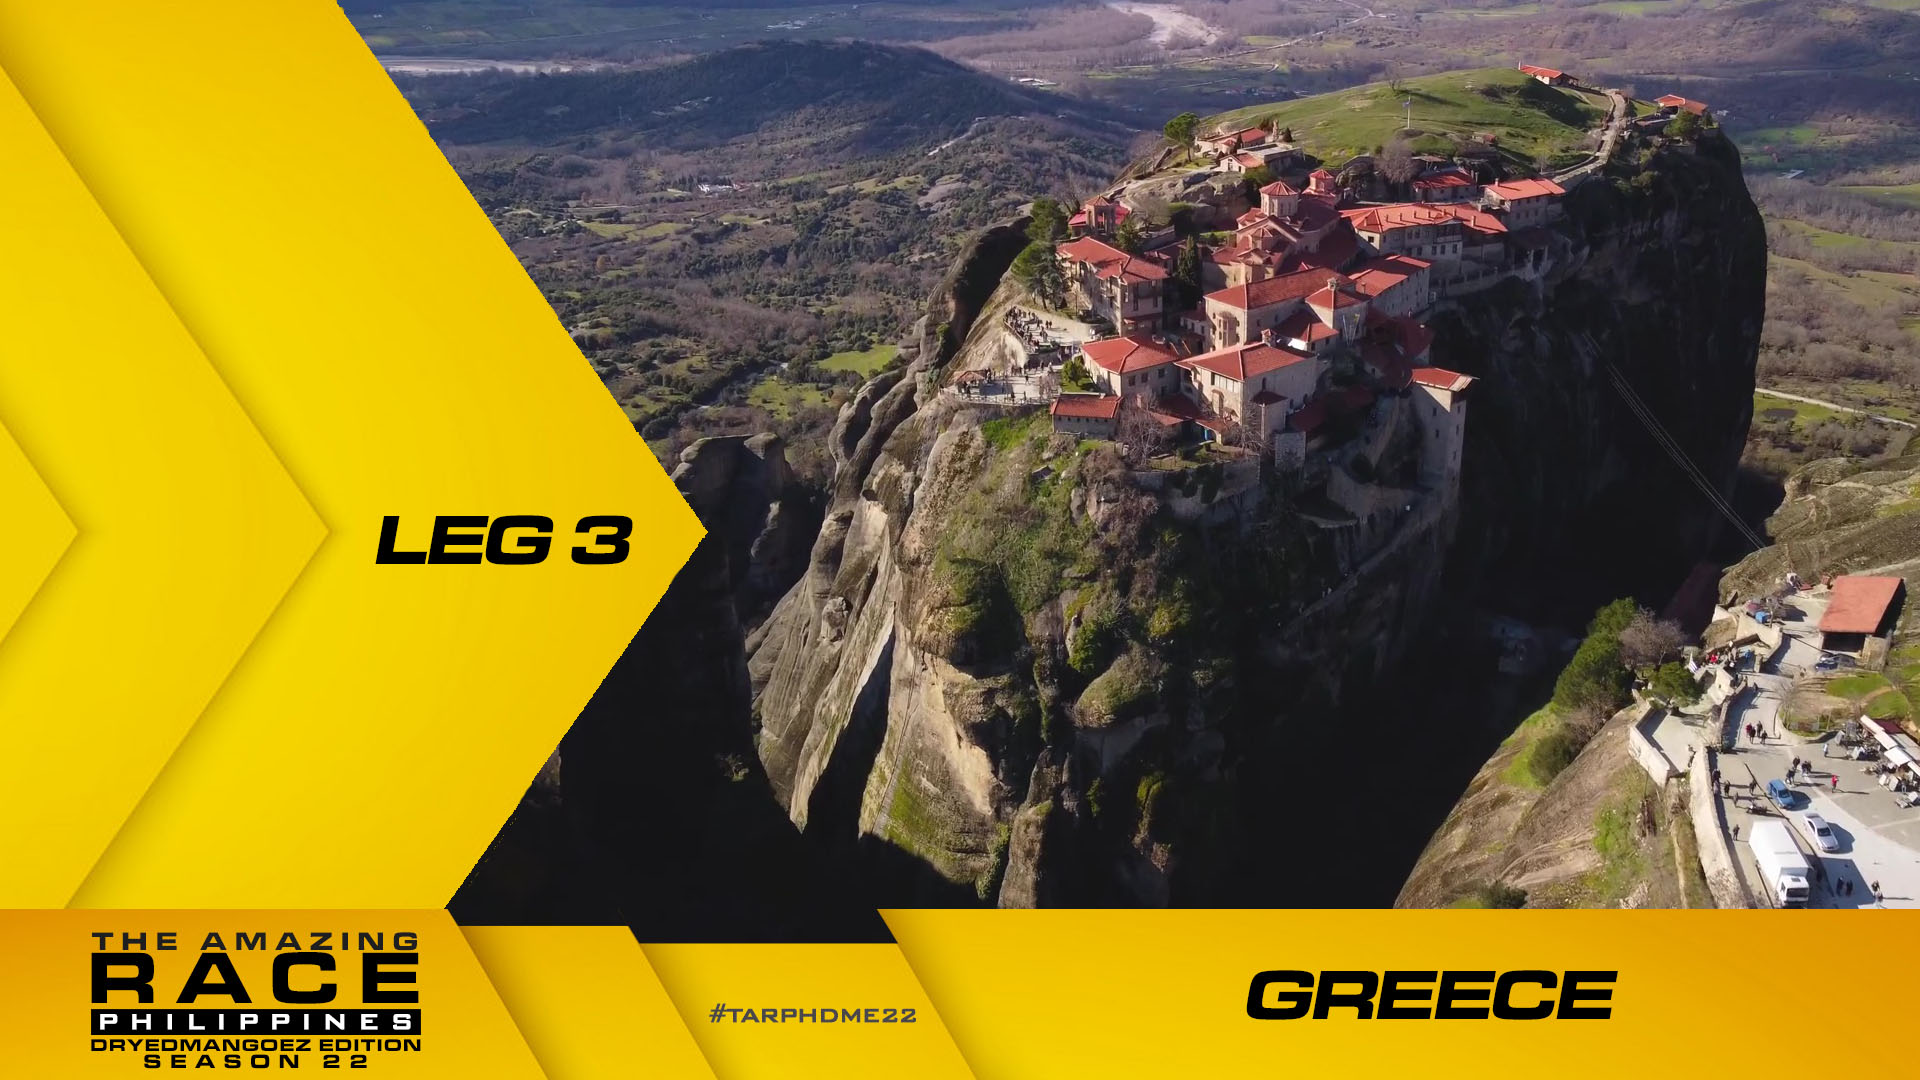 The Amazing Race Philippines: DryedMangoez Edition Season 22, Leg 3 – Greece